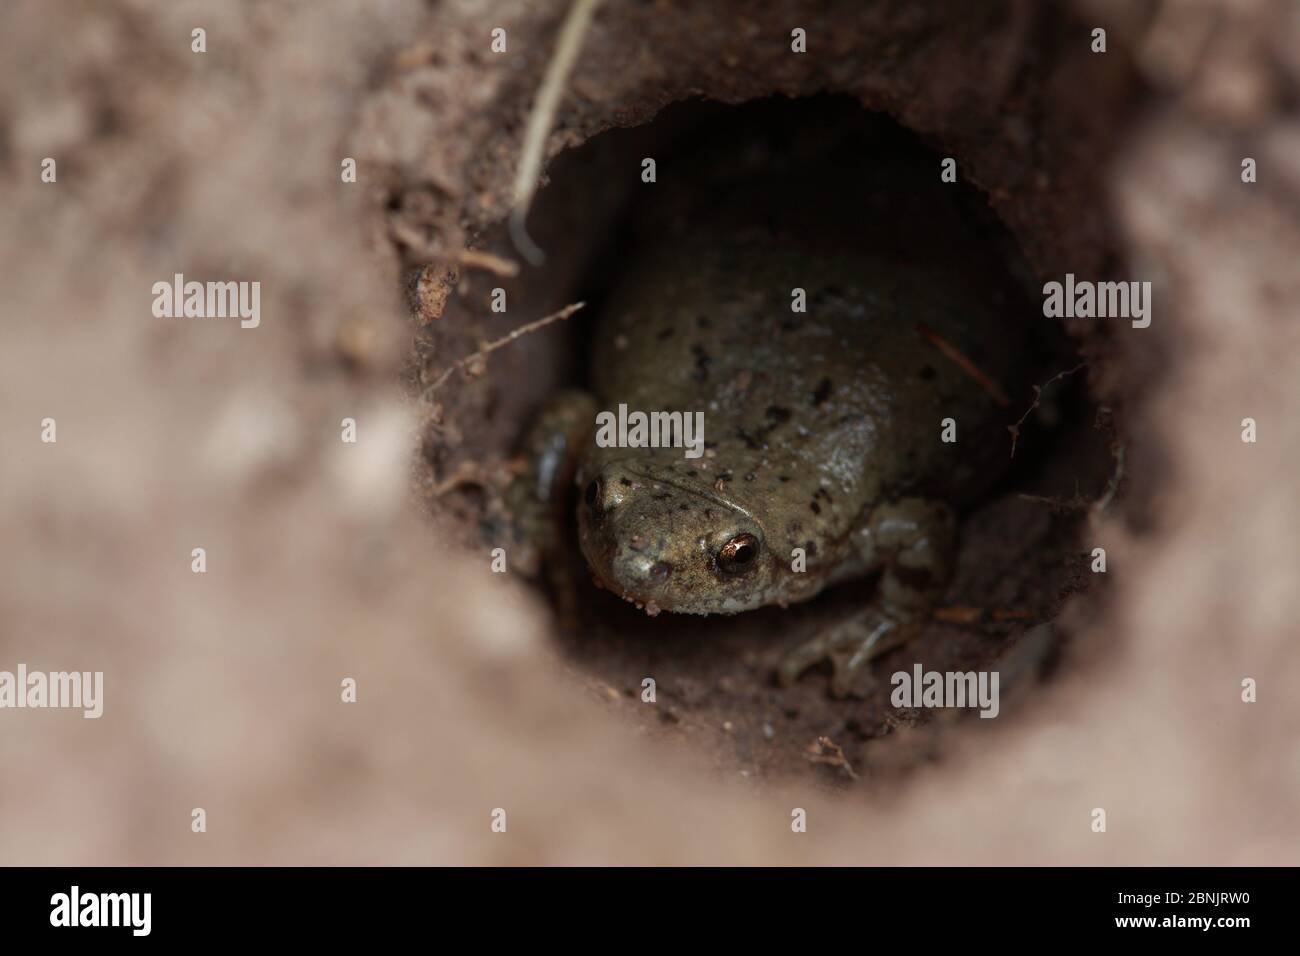 Great plains narrowmouth toad (Gastrophryne olivacea) in a tarantula burrow, South Texas, USA, April. Stock Photo